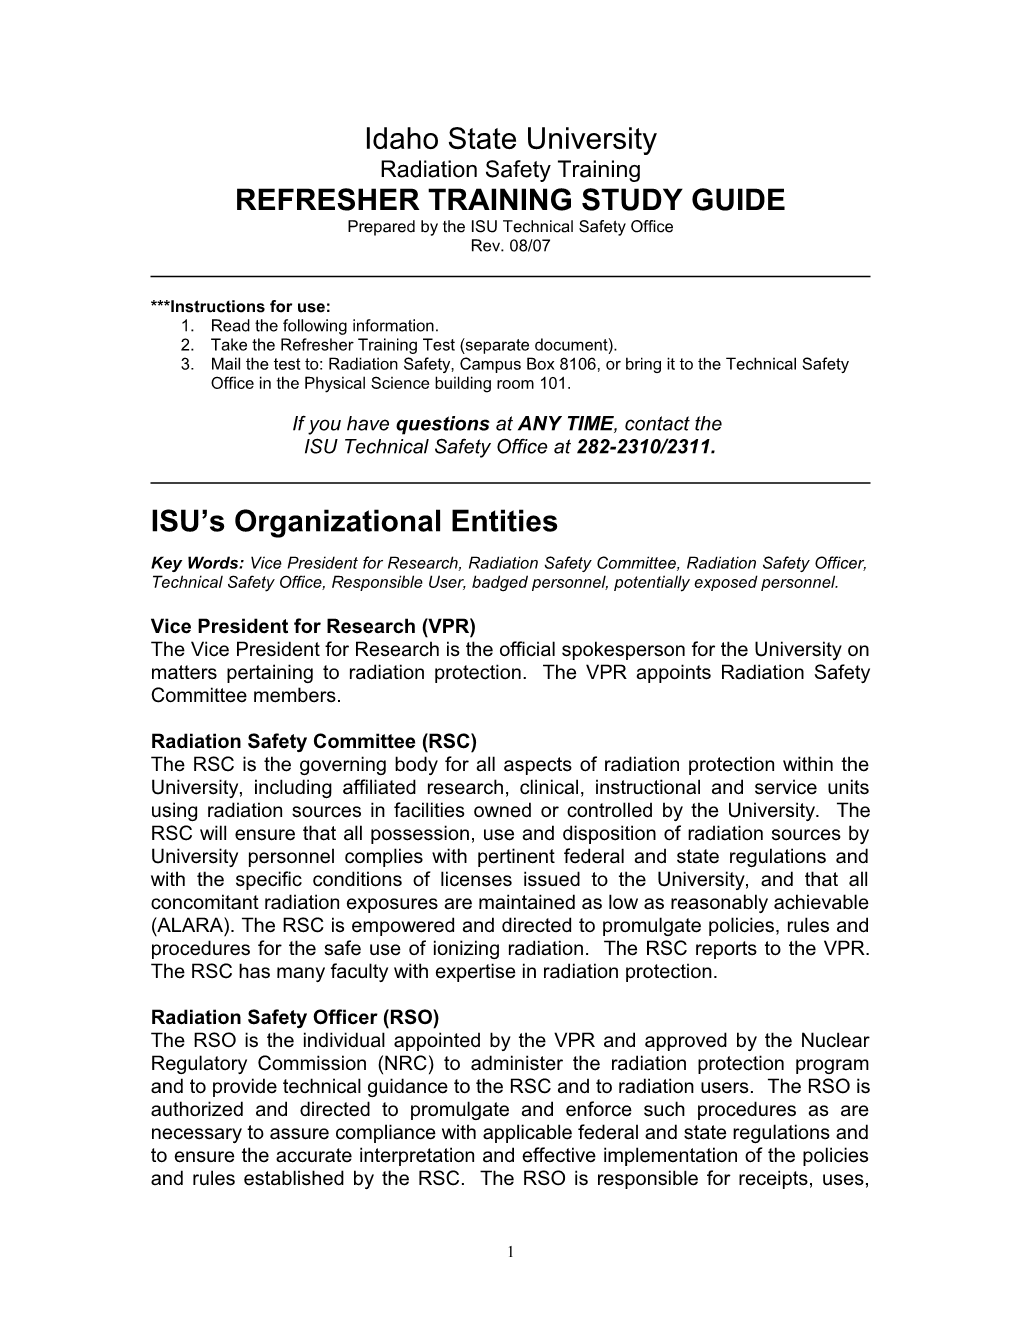 Refresher Training - Radiation Users